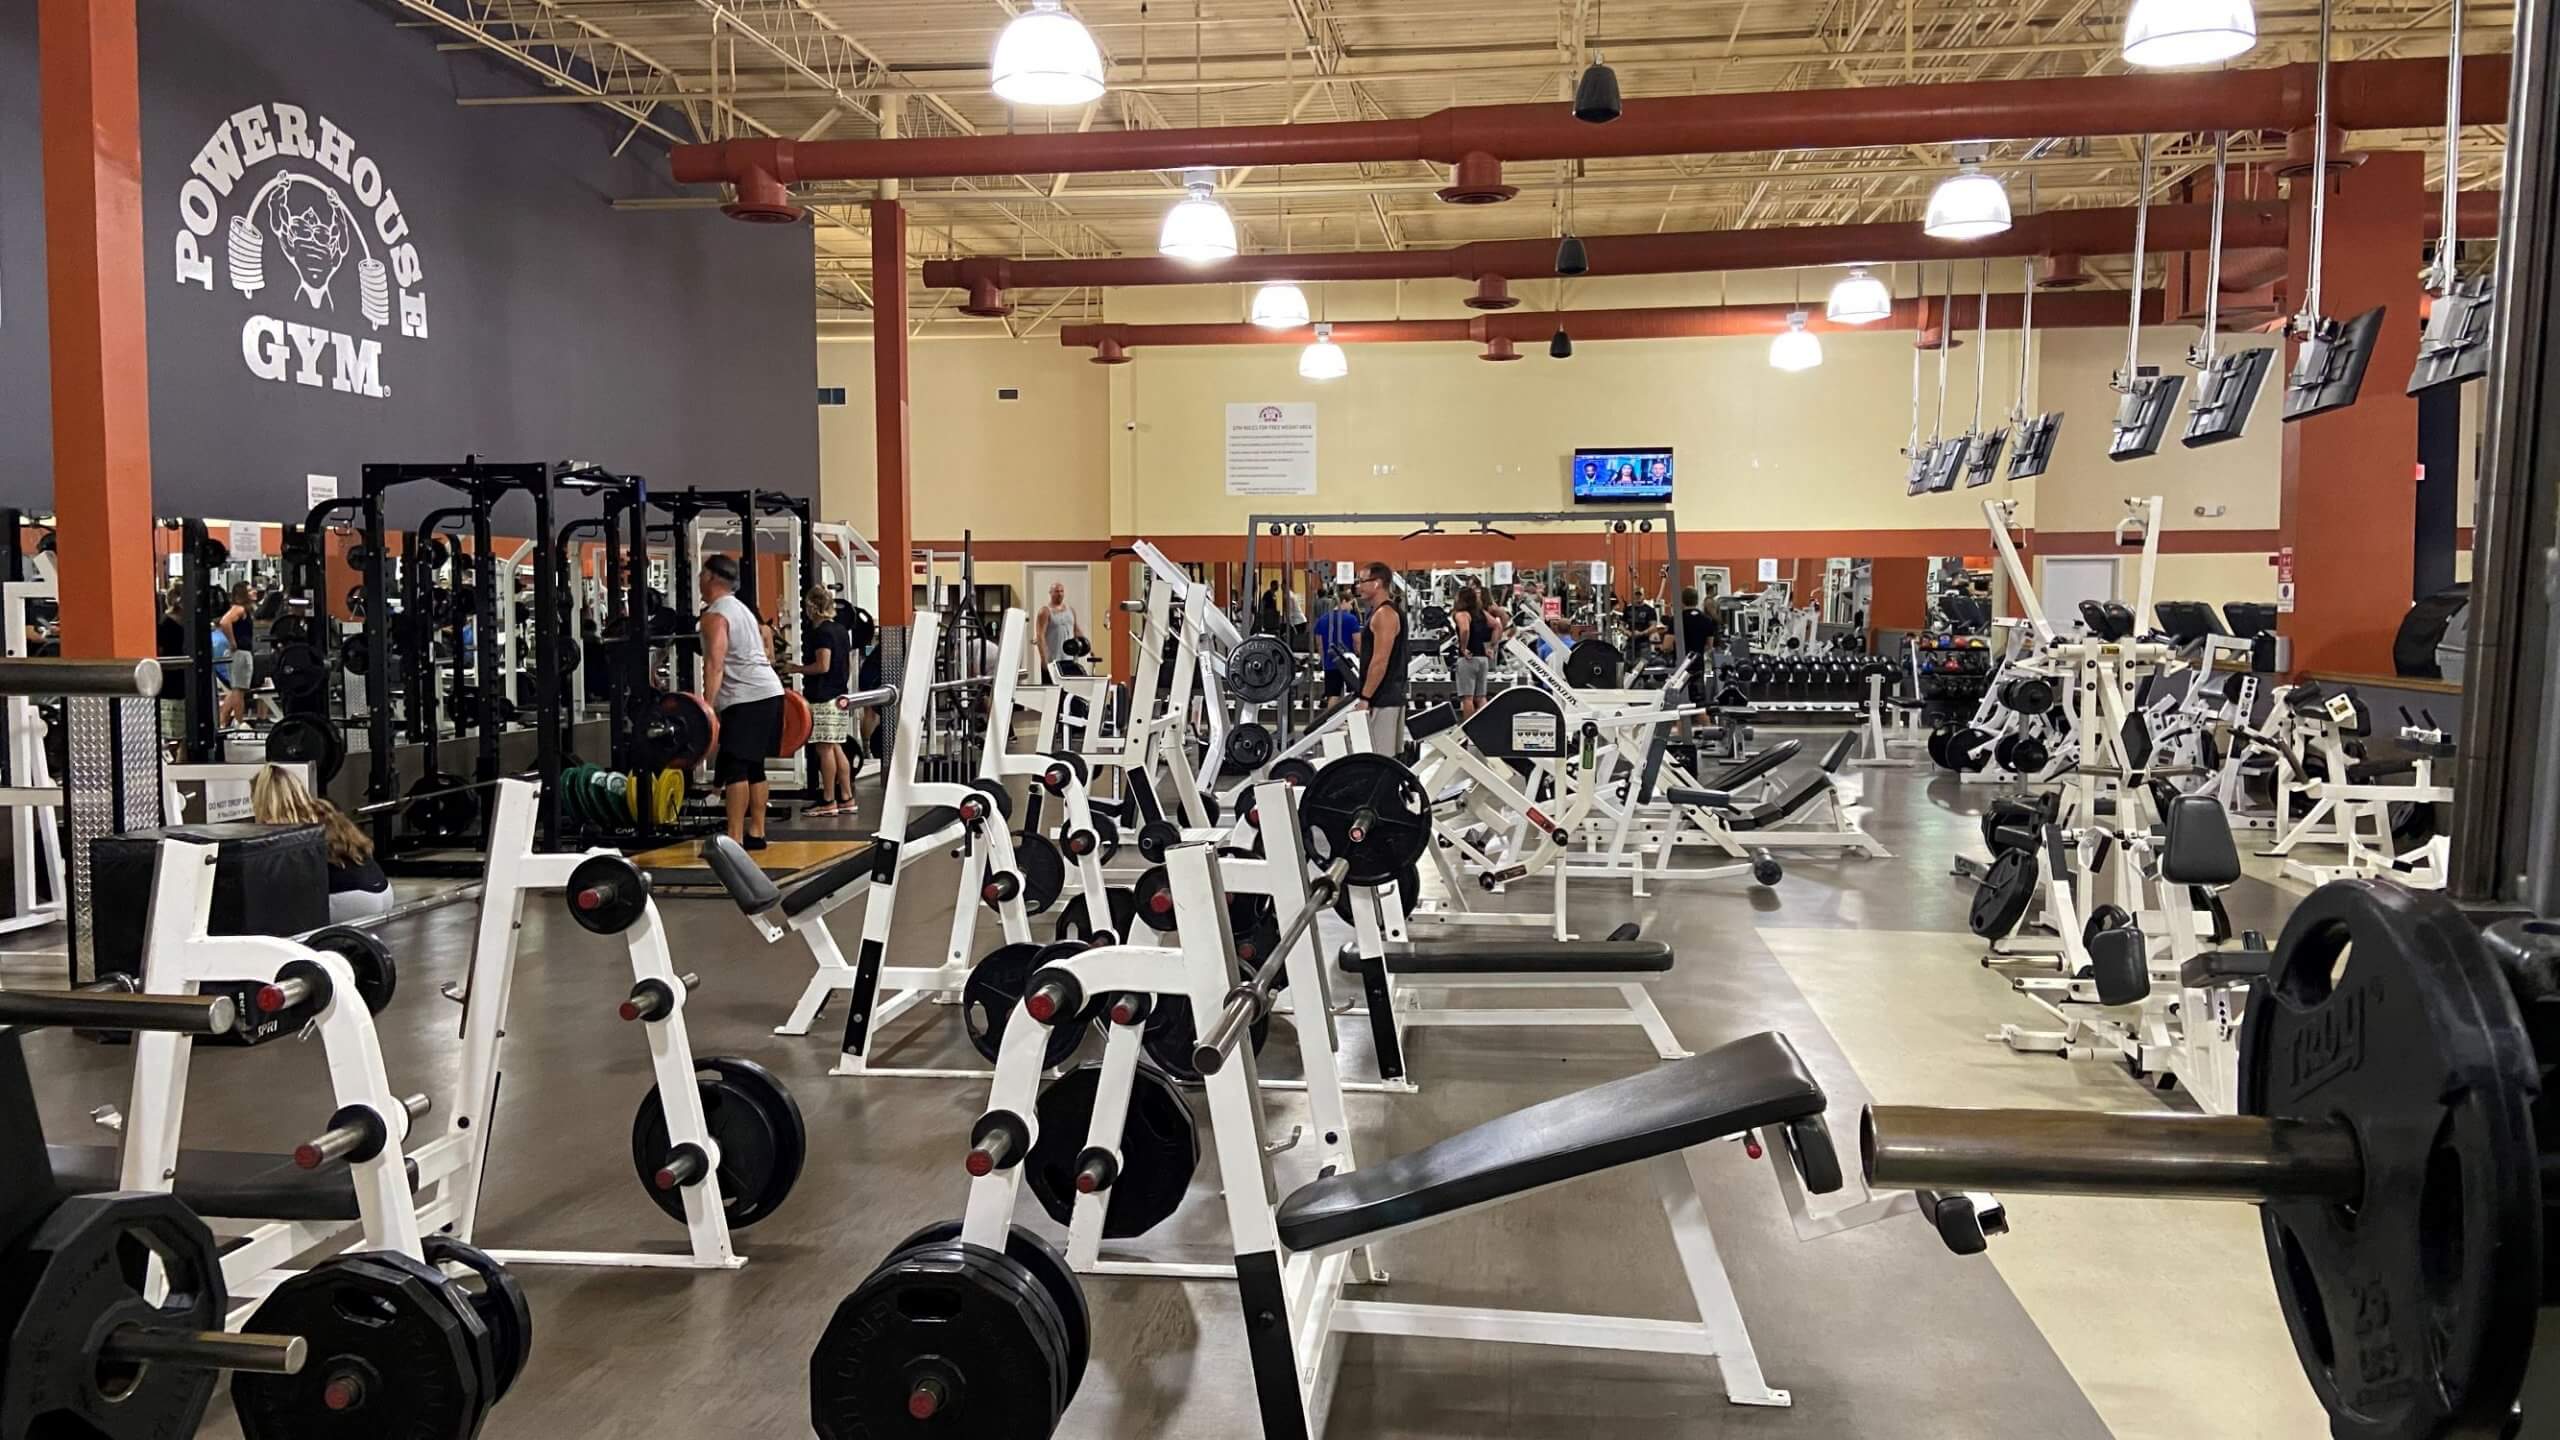 An Image of the Stuart, FL Powerhouse Gym Location